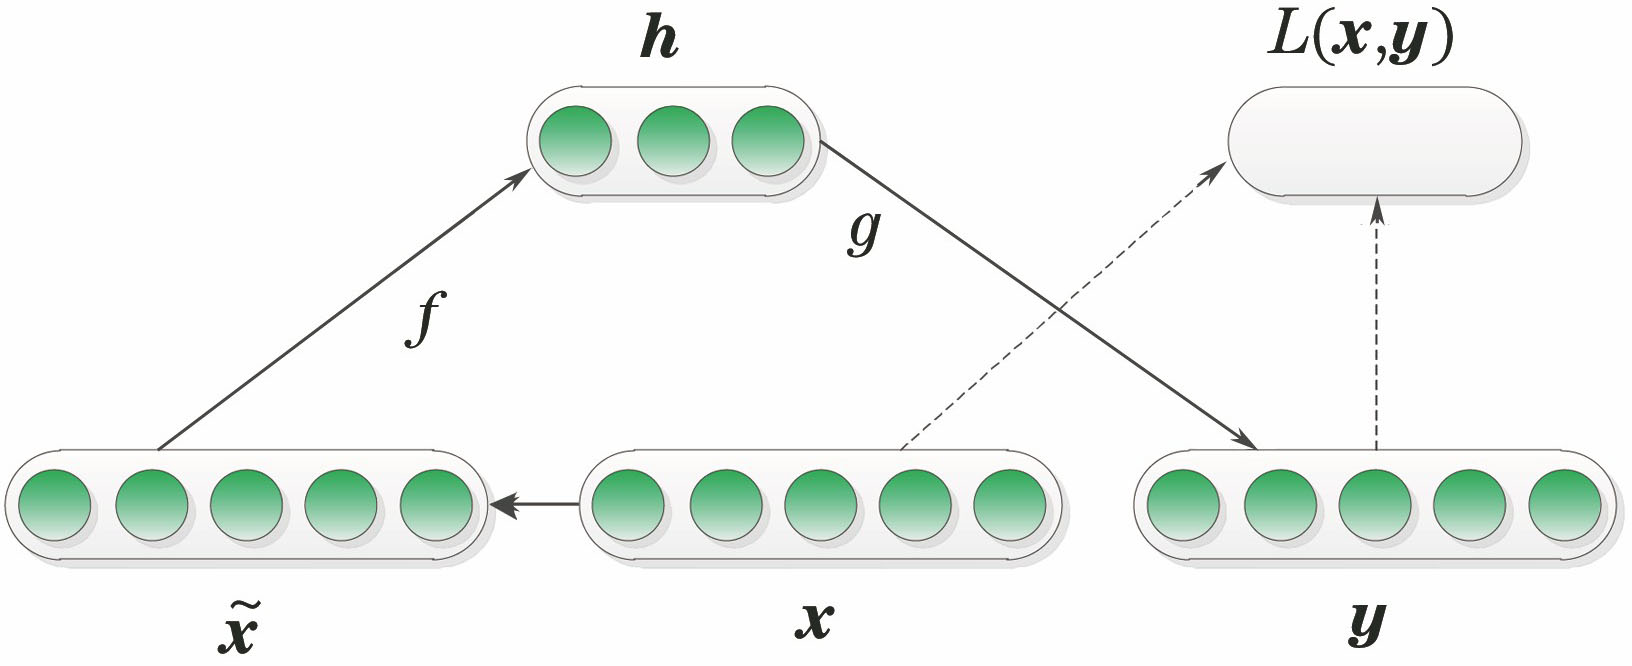 Algorithm flow of DAE